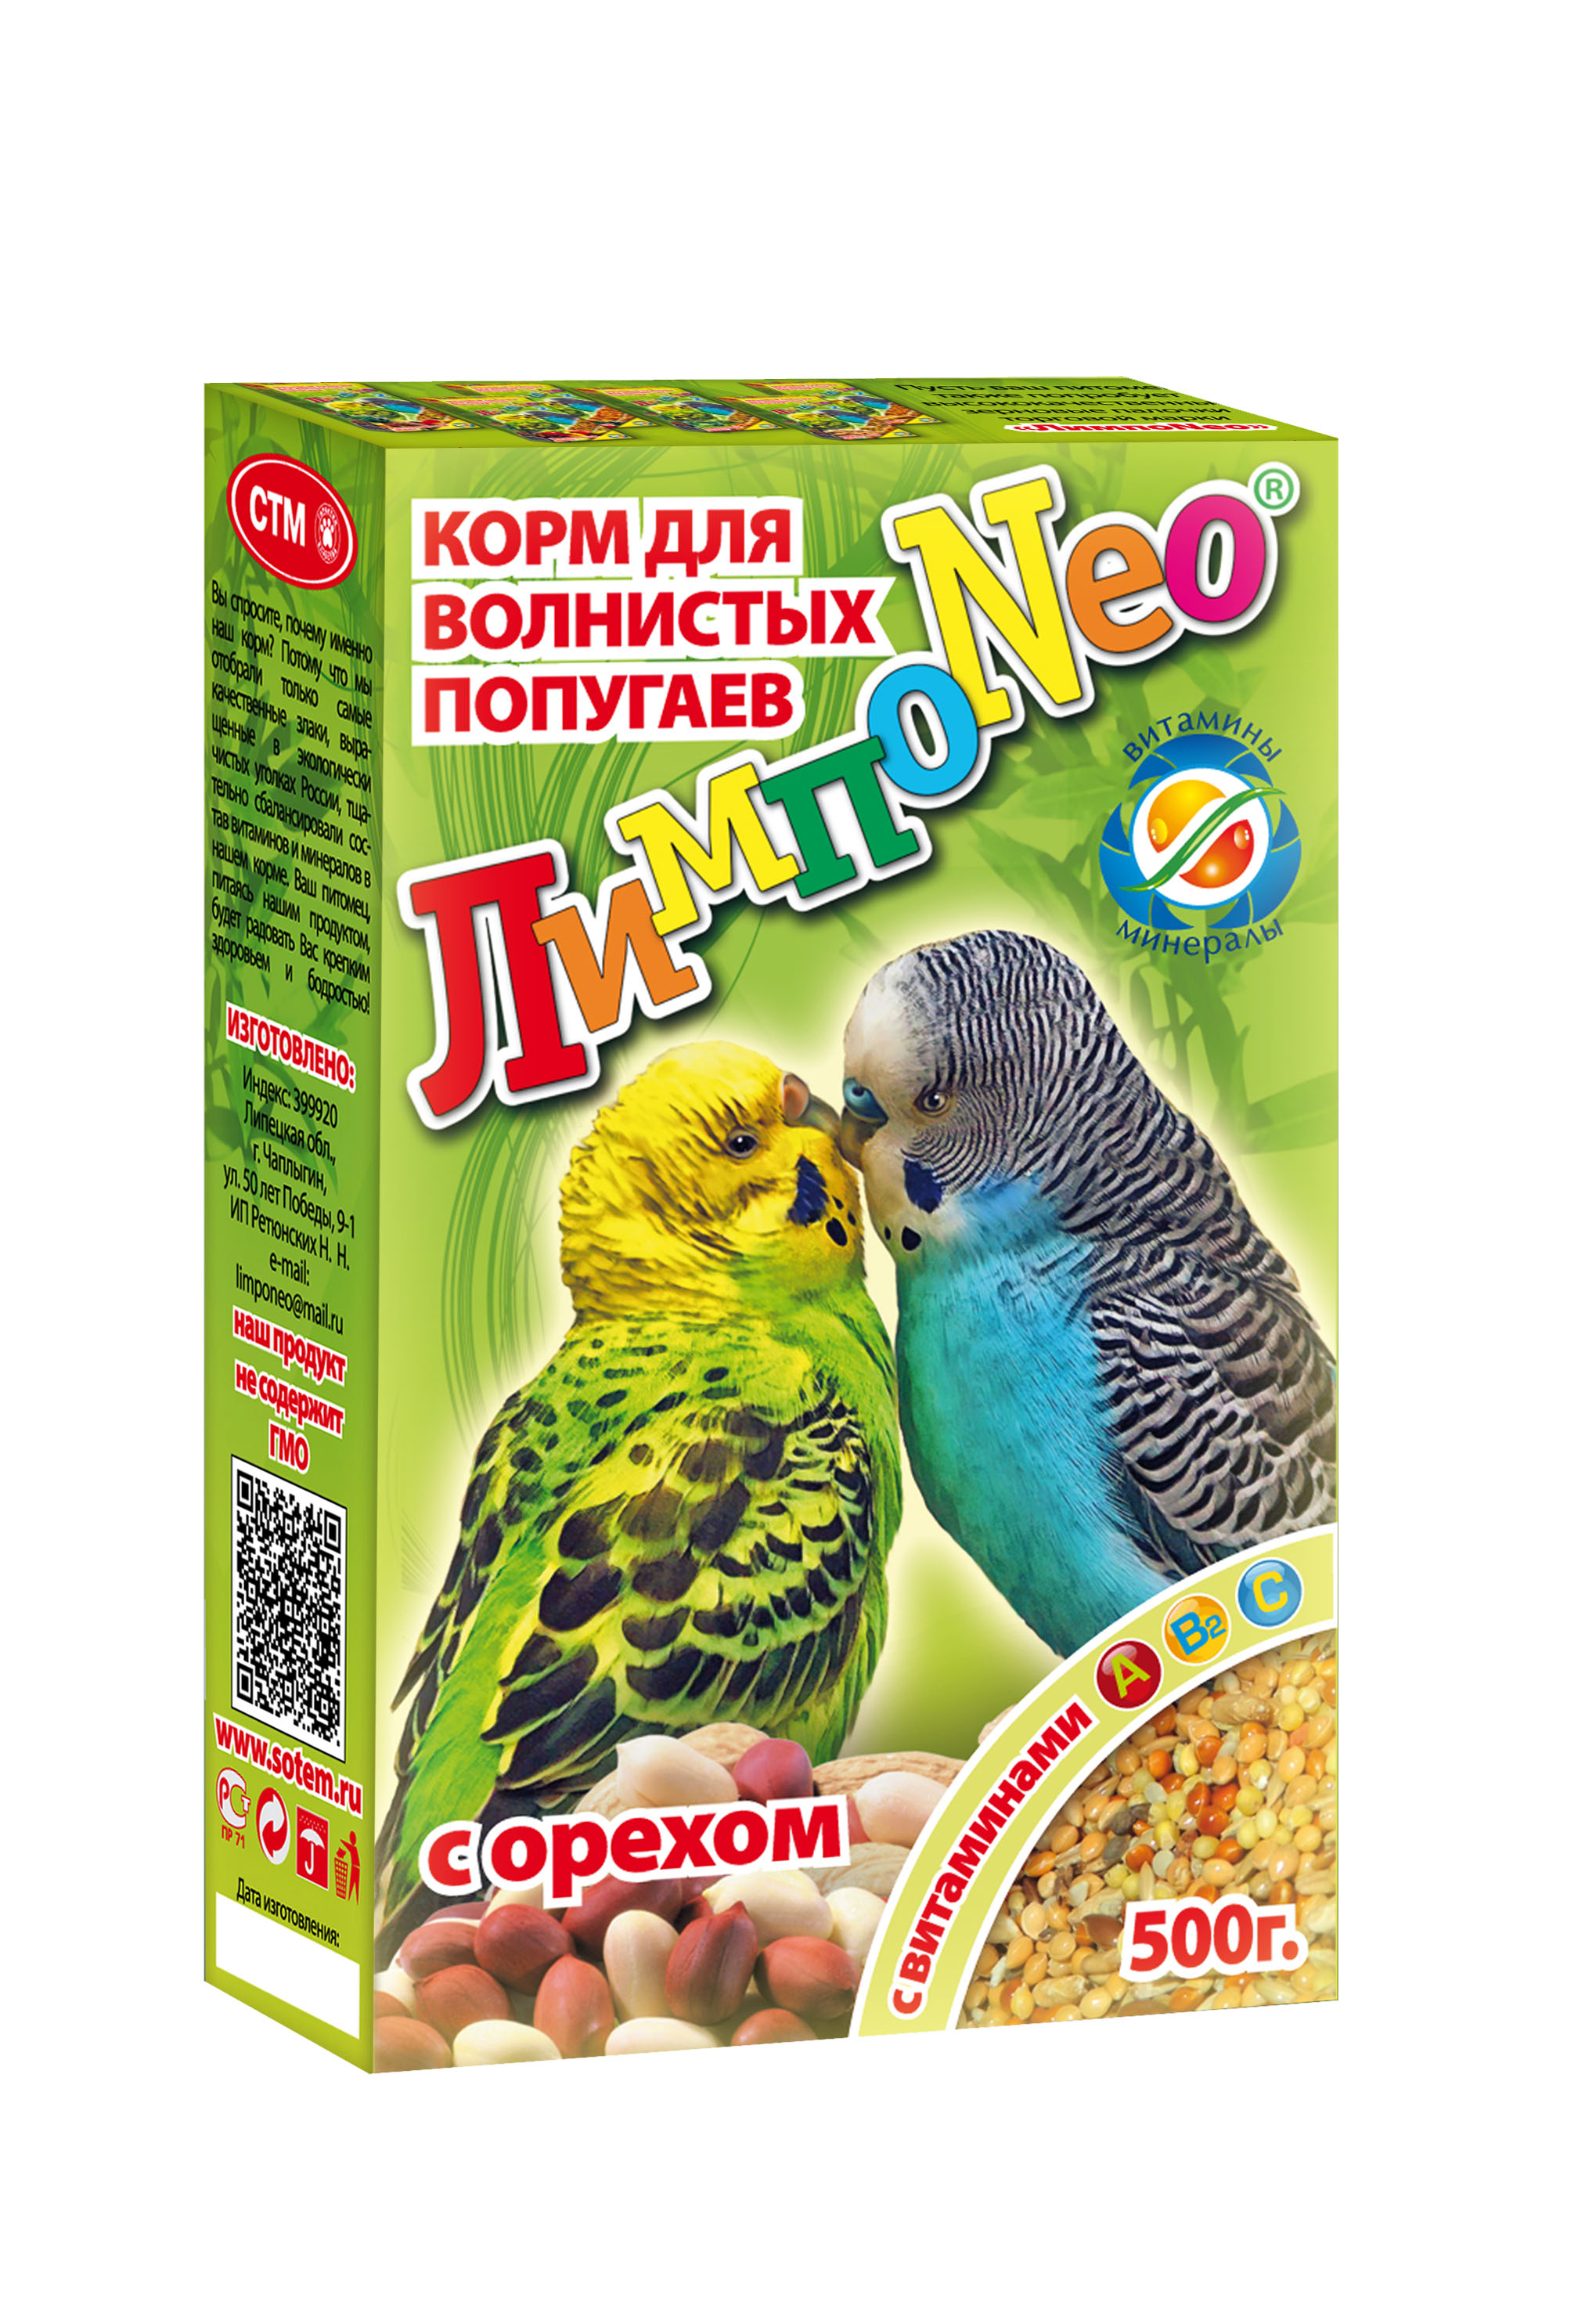 ЛимпоNeo корм для волнистых попугаев ОРЕХ 500 гр.\14